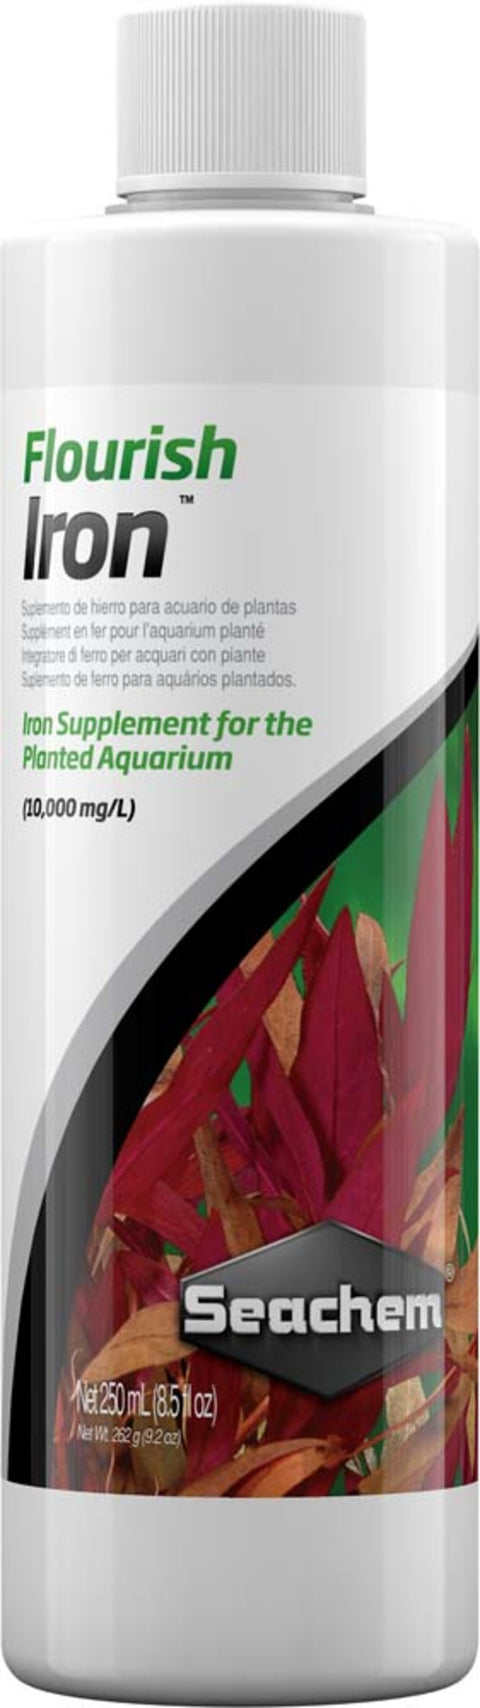 Seachem Flourish Iron Plant Supplement